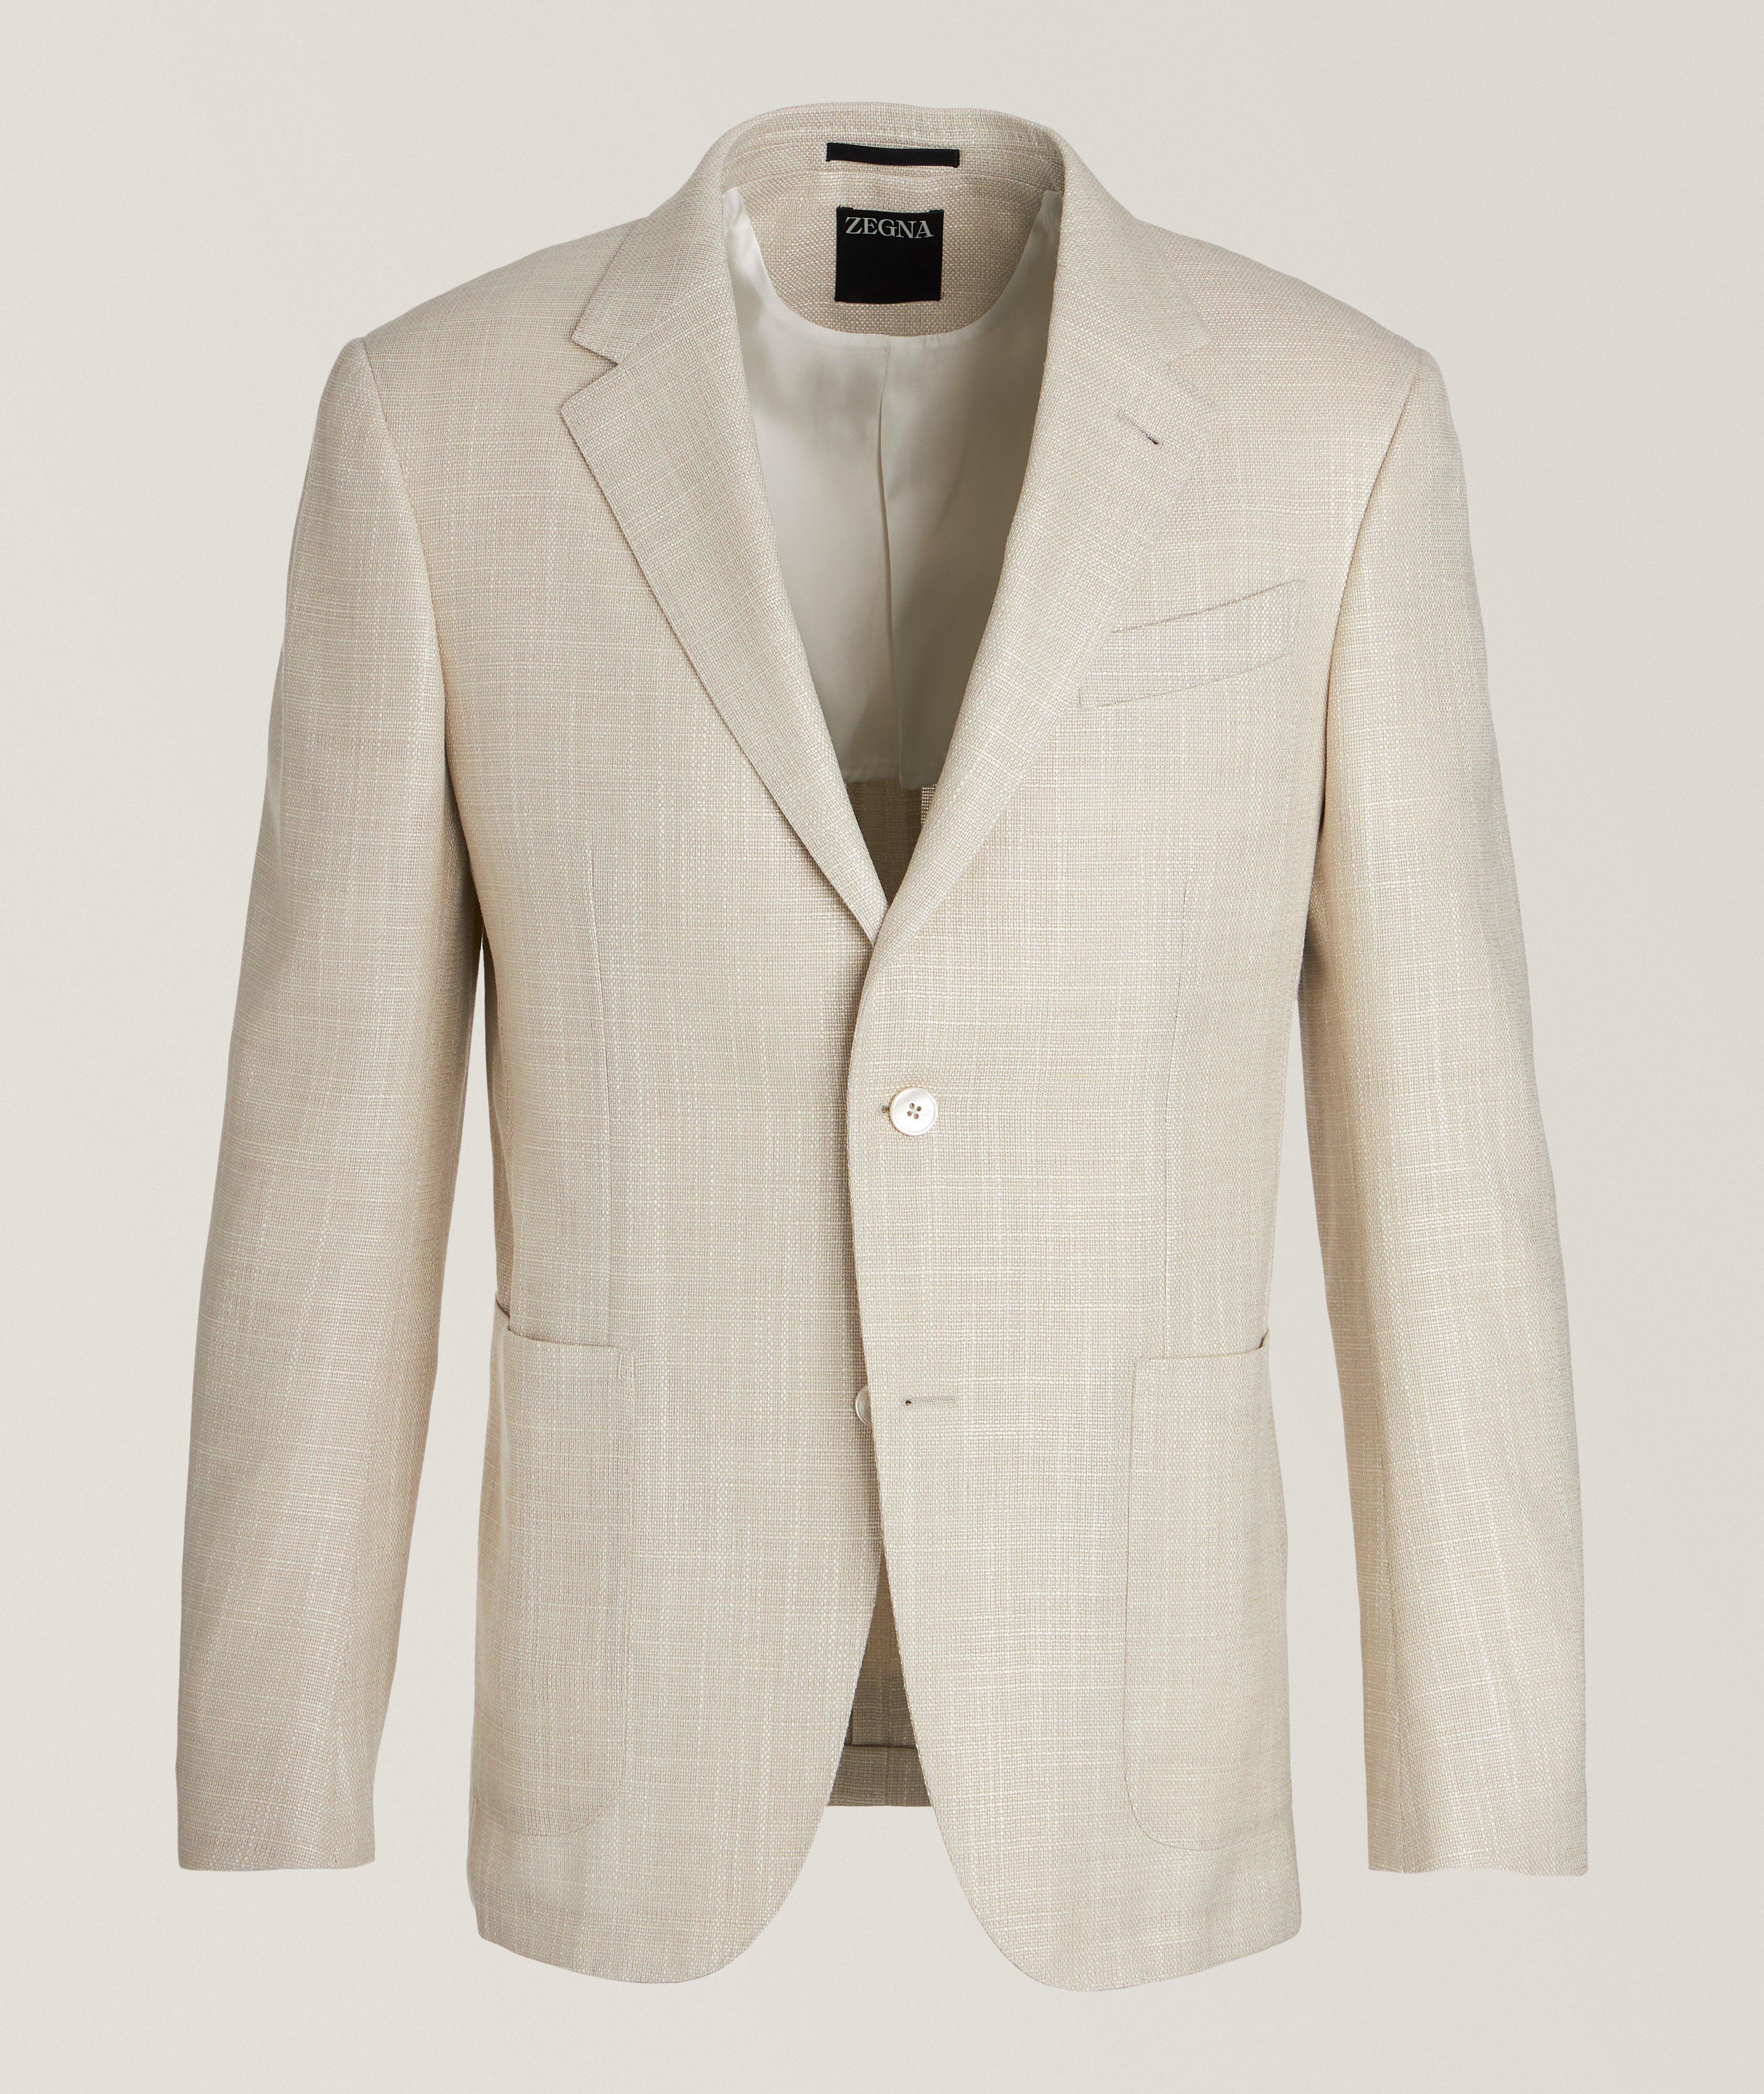 Zegna Natural Textured Wool-Silk Sport Jacket